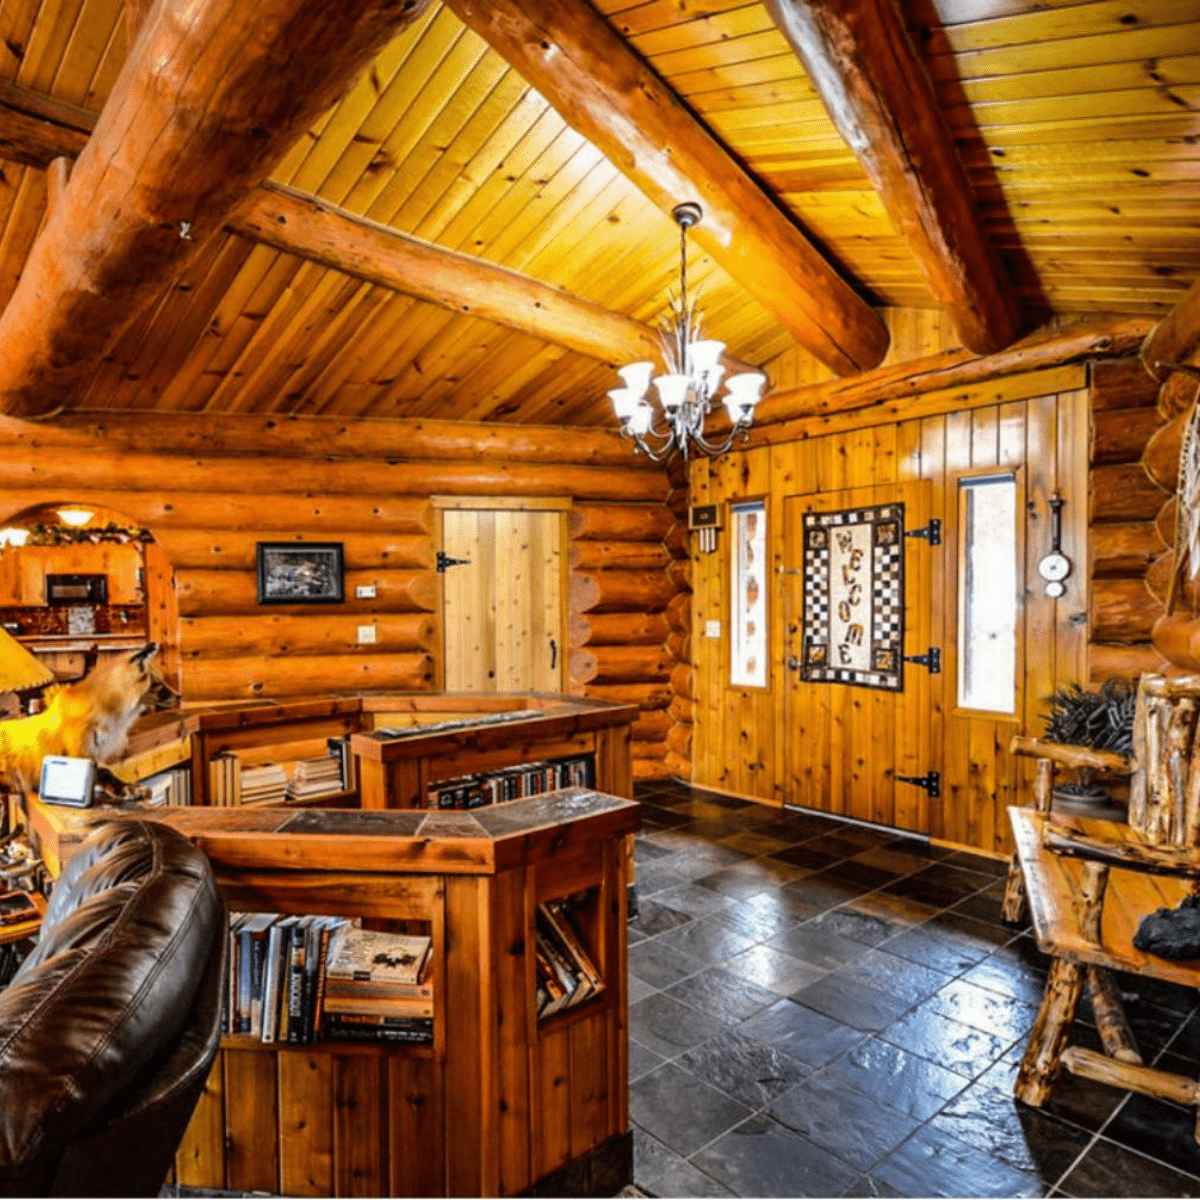 Rustic Furniture, Cabin Decor, Lodge furniture - All Indoor Cabin